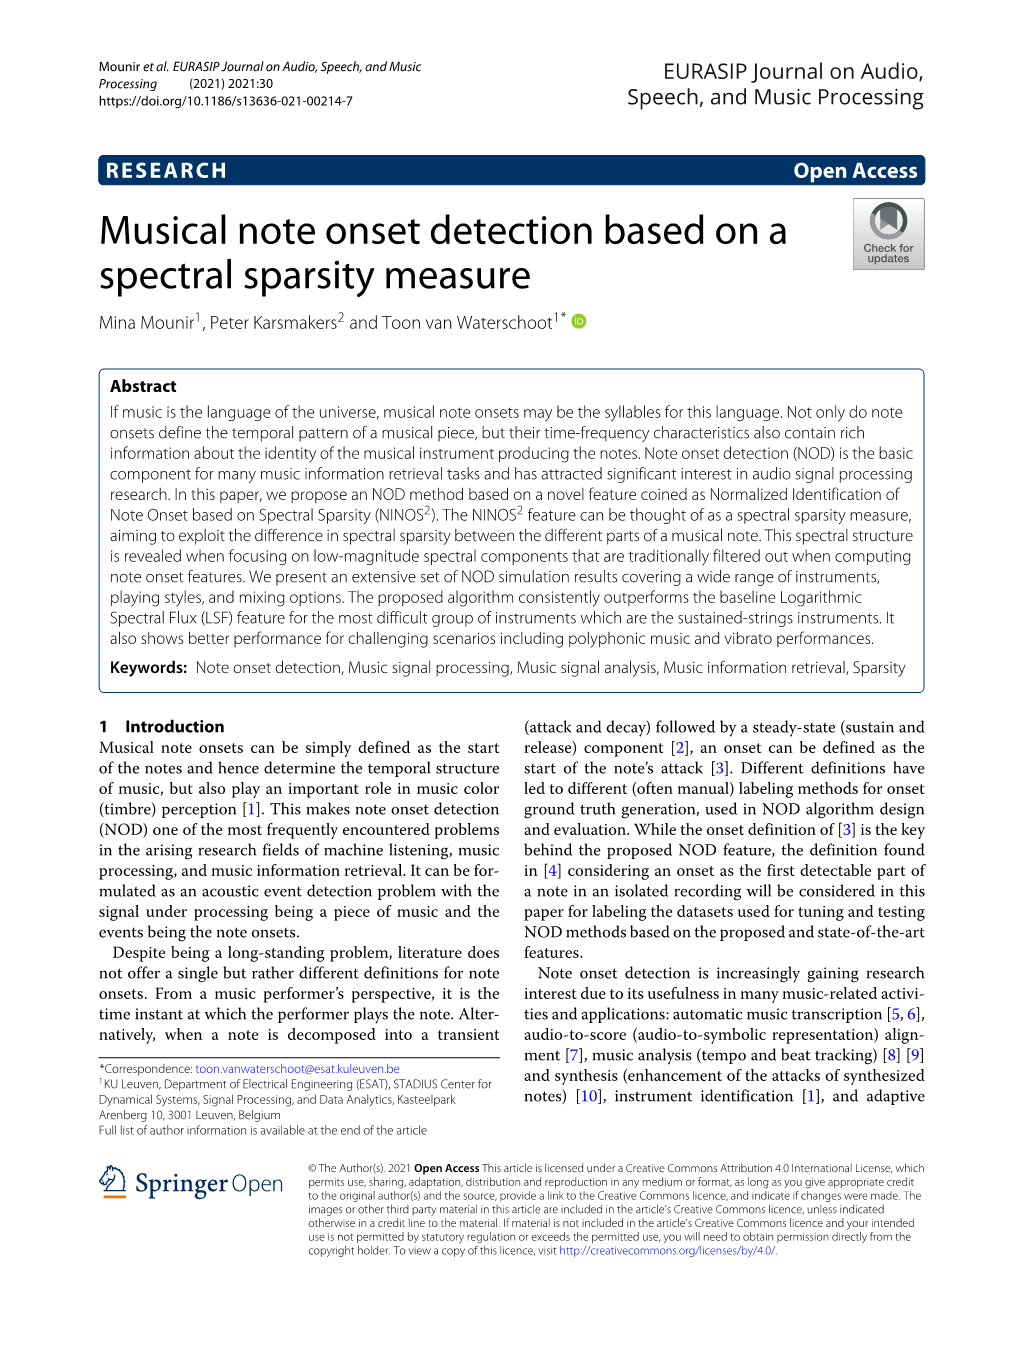 Musical Note Onset Detection Based on a Spectral Sparsity Measure Mina Mounir1, Peter Karsmakers2 and Toon Van Waterschoot1*